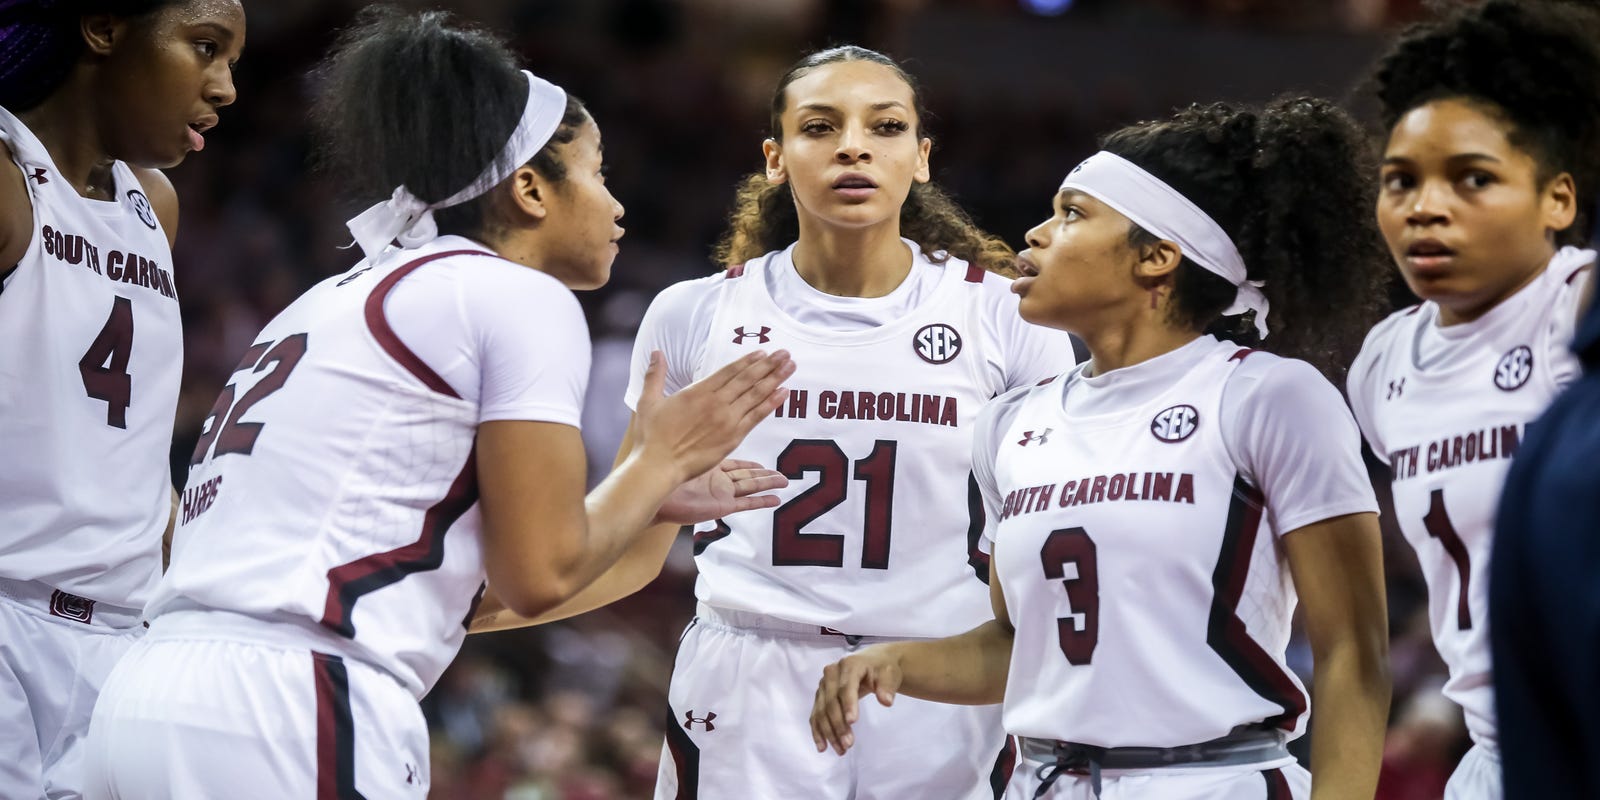 South Carolina women's basketball returns to the top